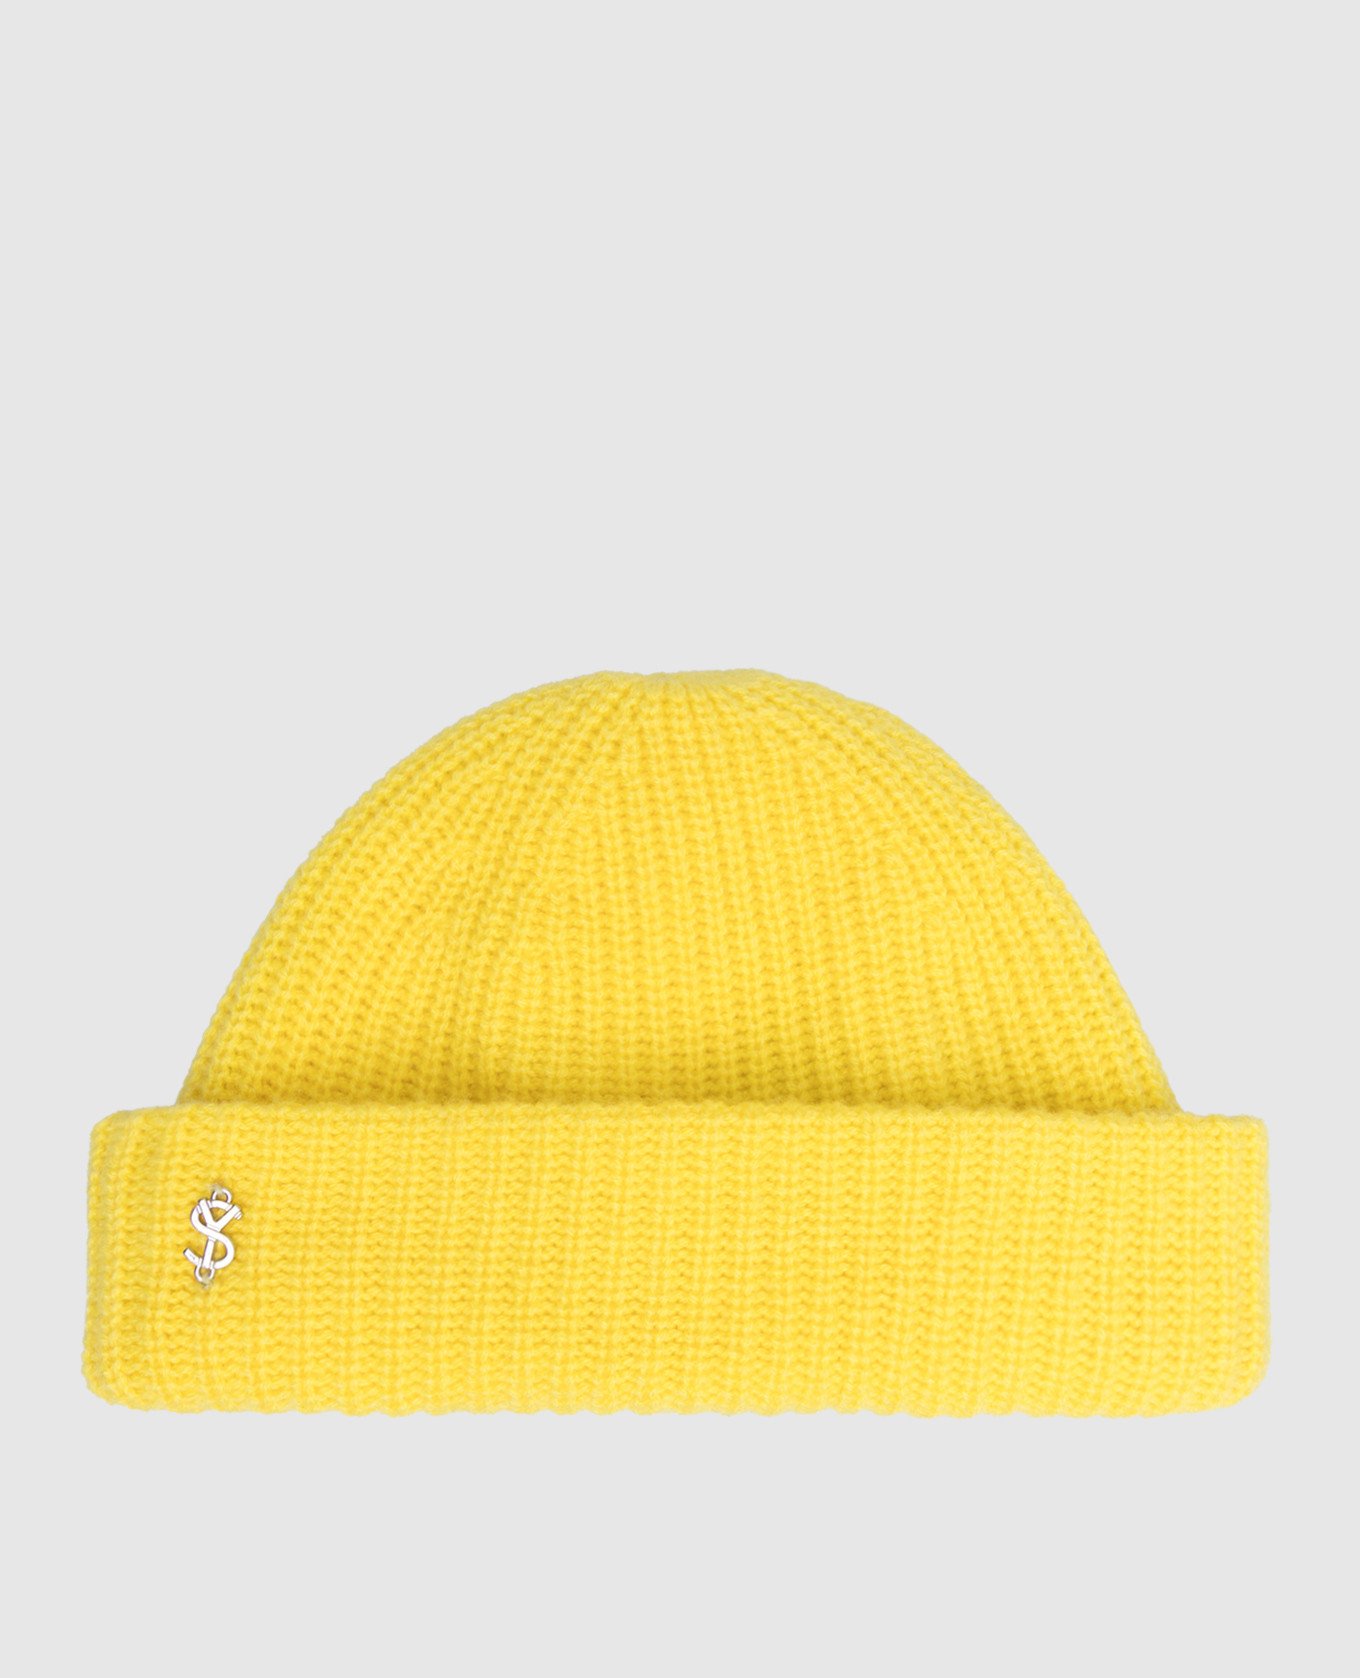 Yellow hat with metallic logo